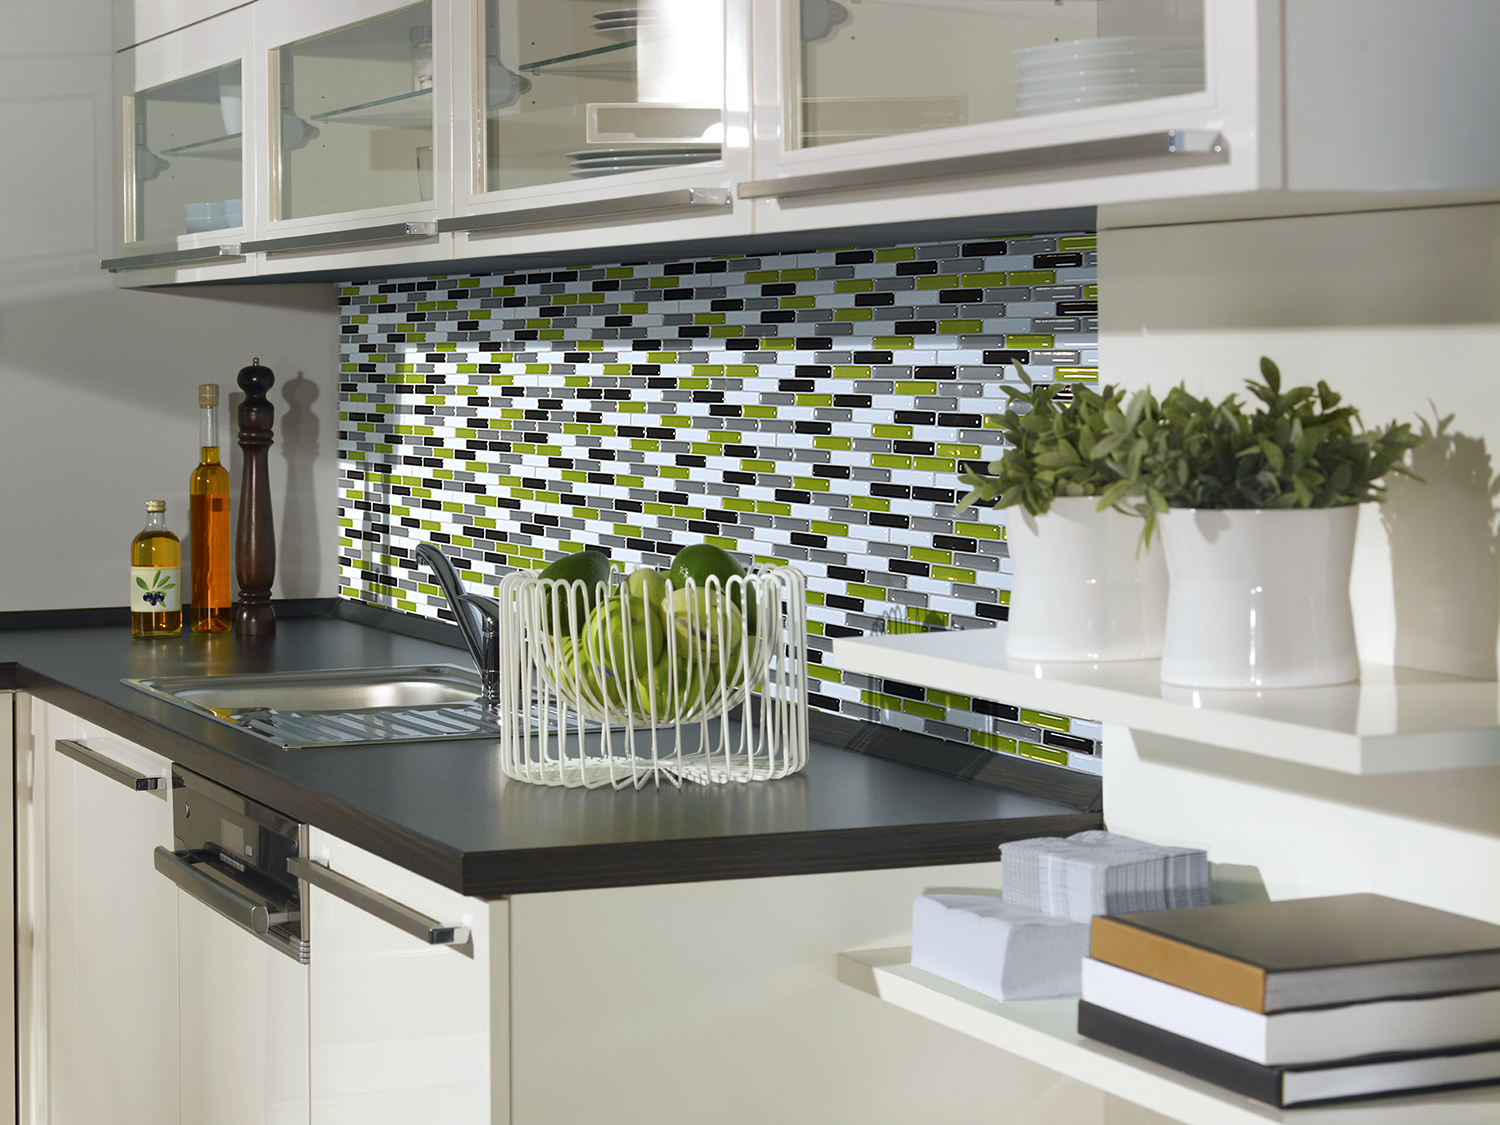 Mosaic Tile Backsplash | Creating a Ceramic Tile Mosaic for a Kitchen Backsplash